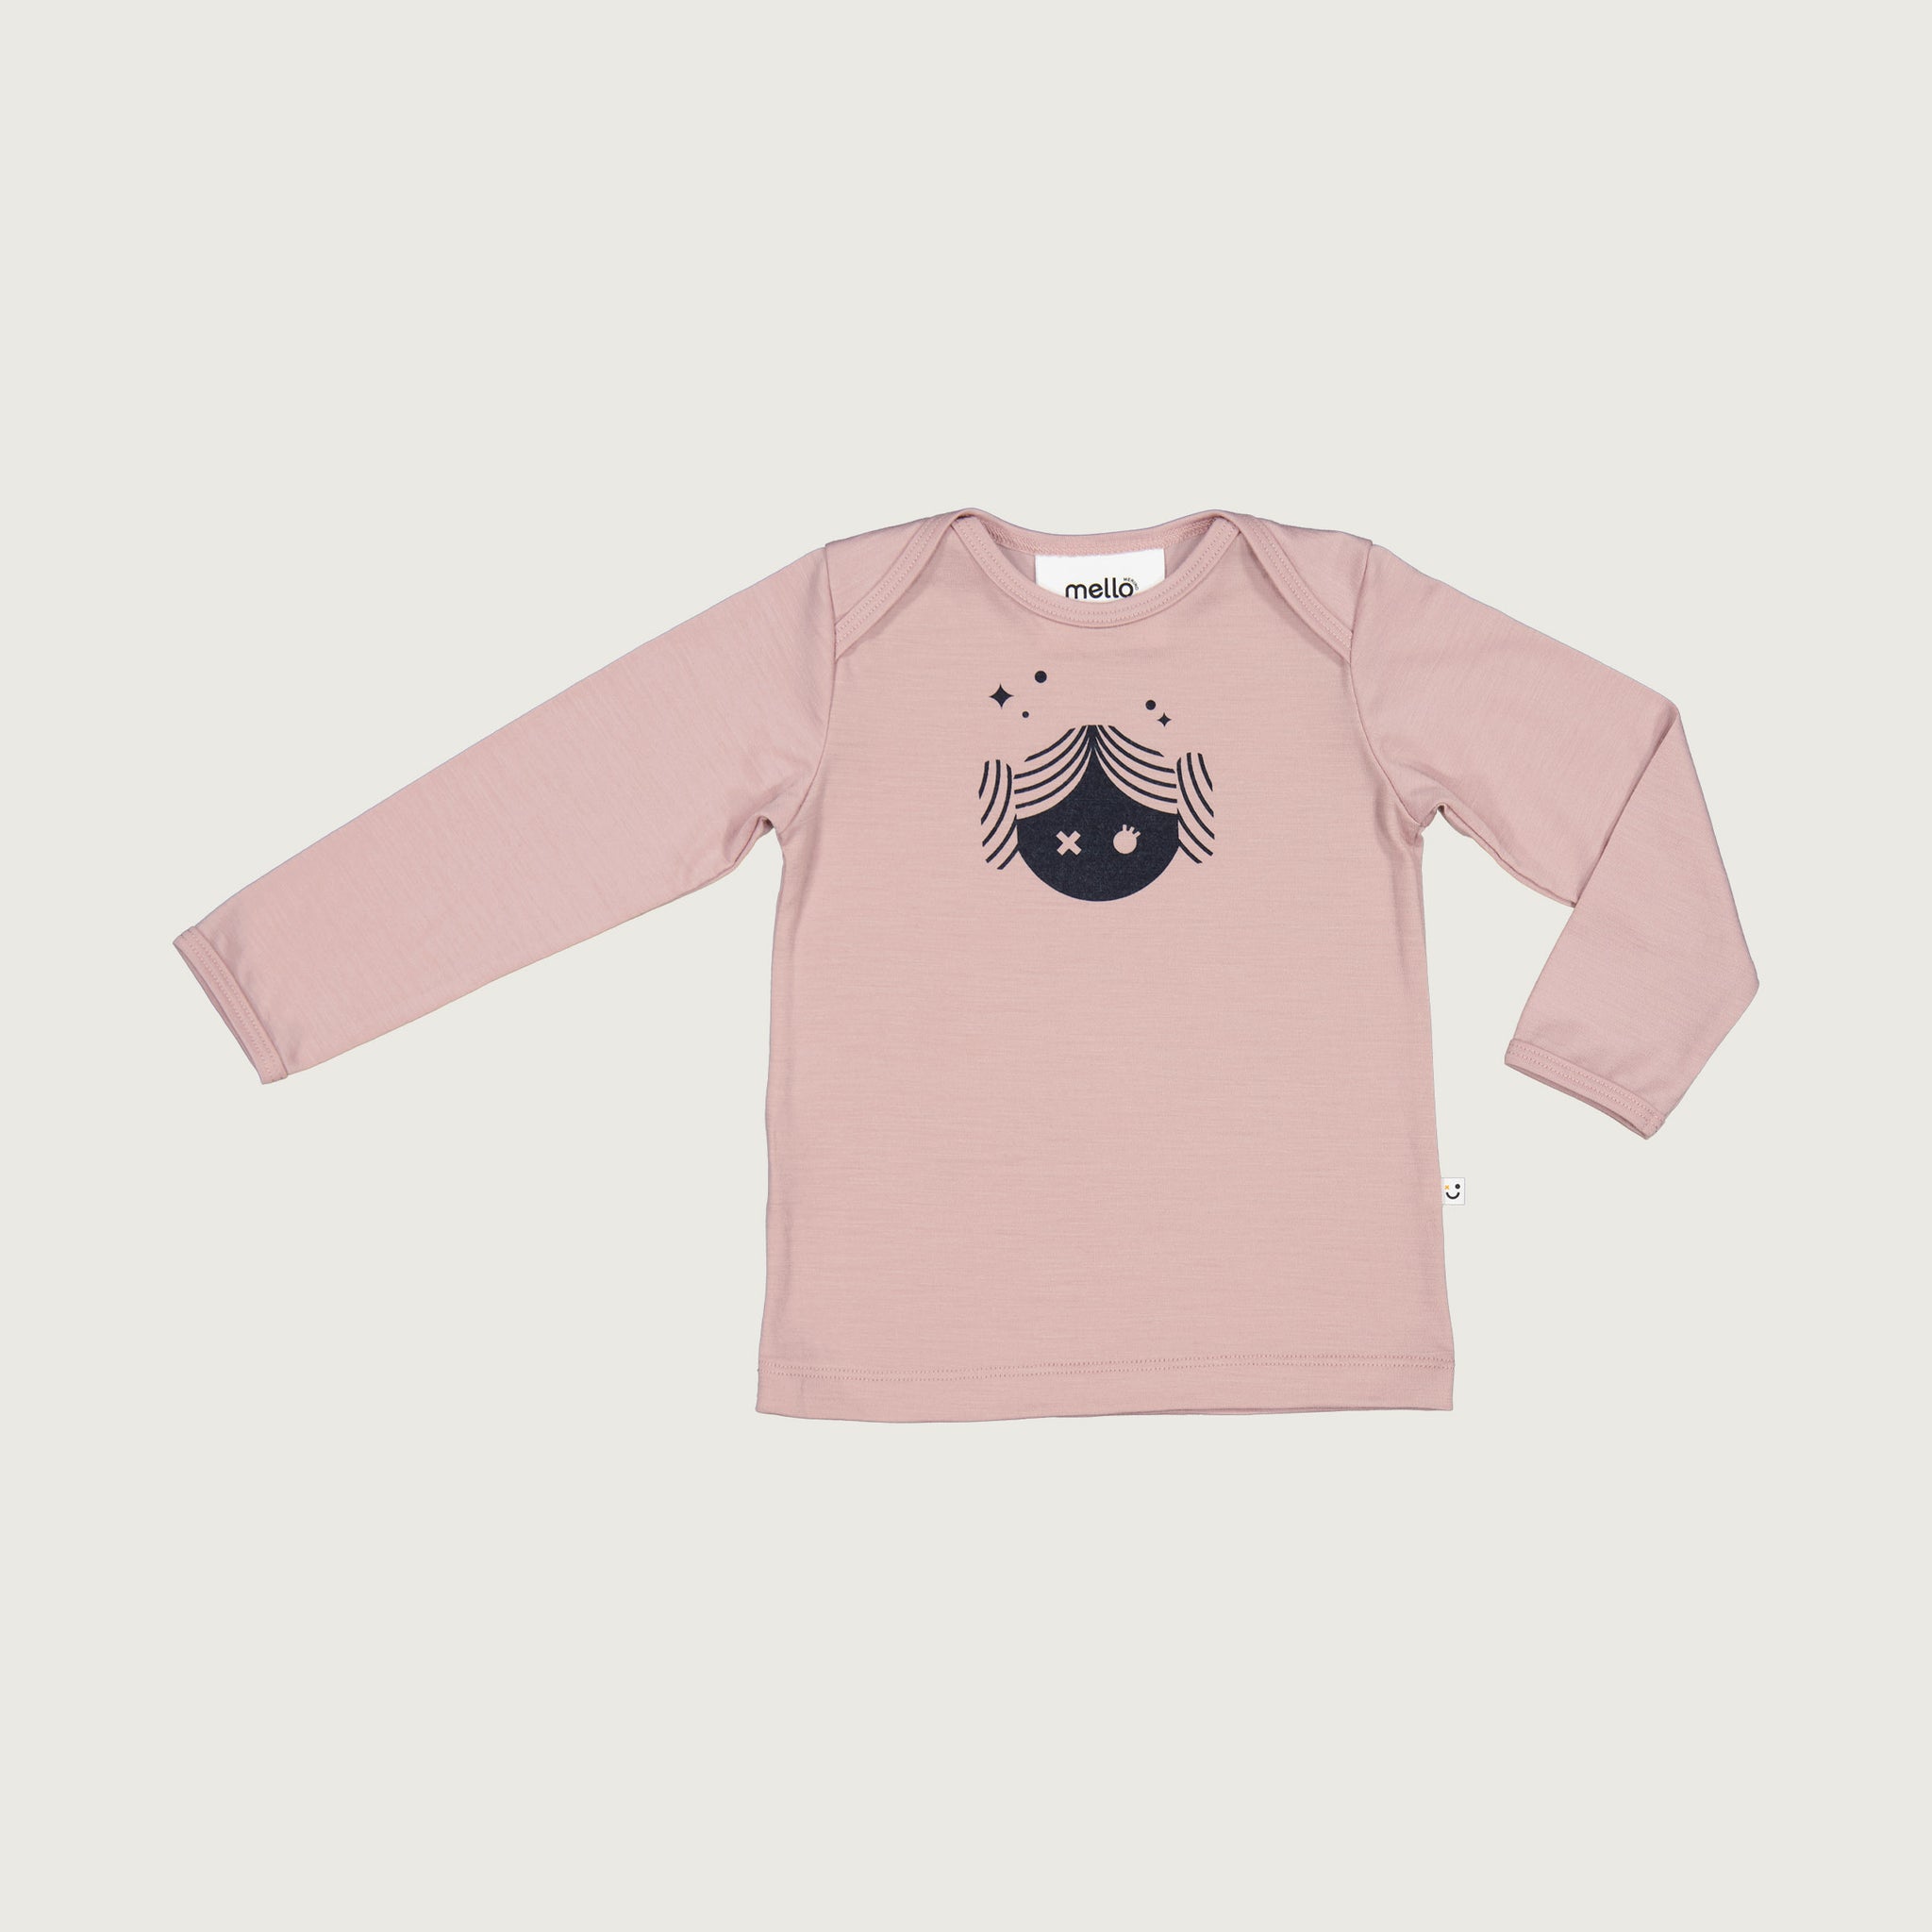 merino baby long sleeve top blush pink with print